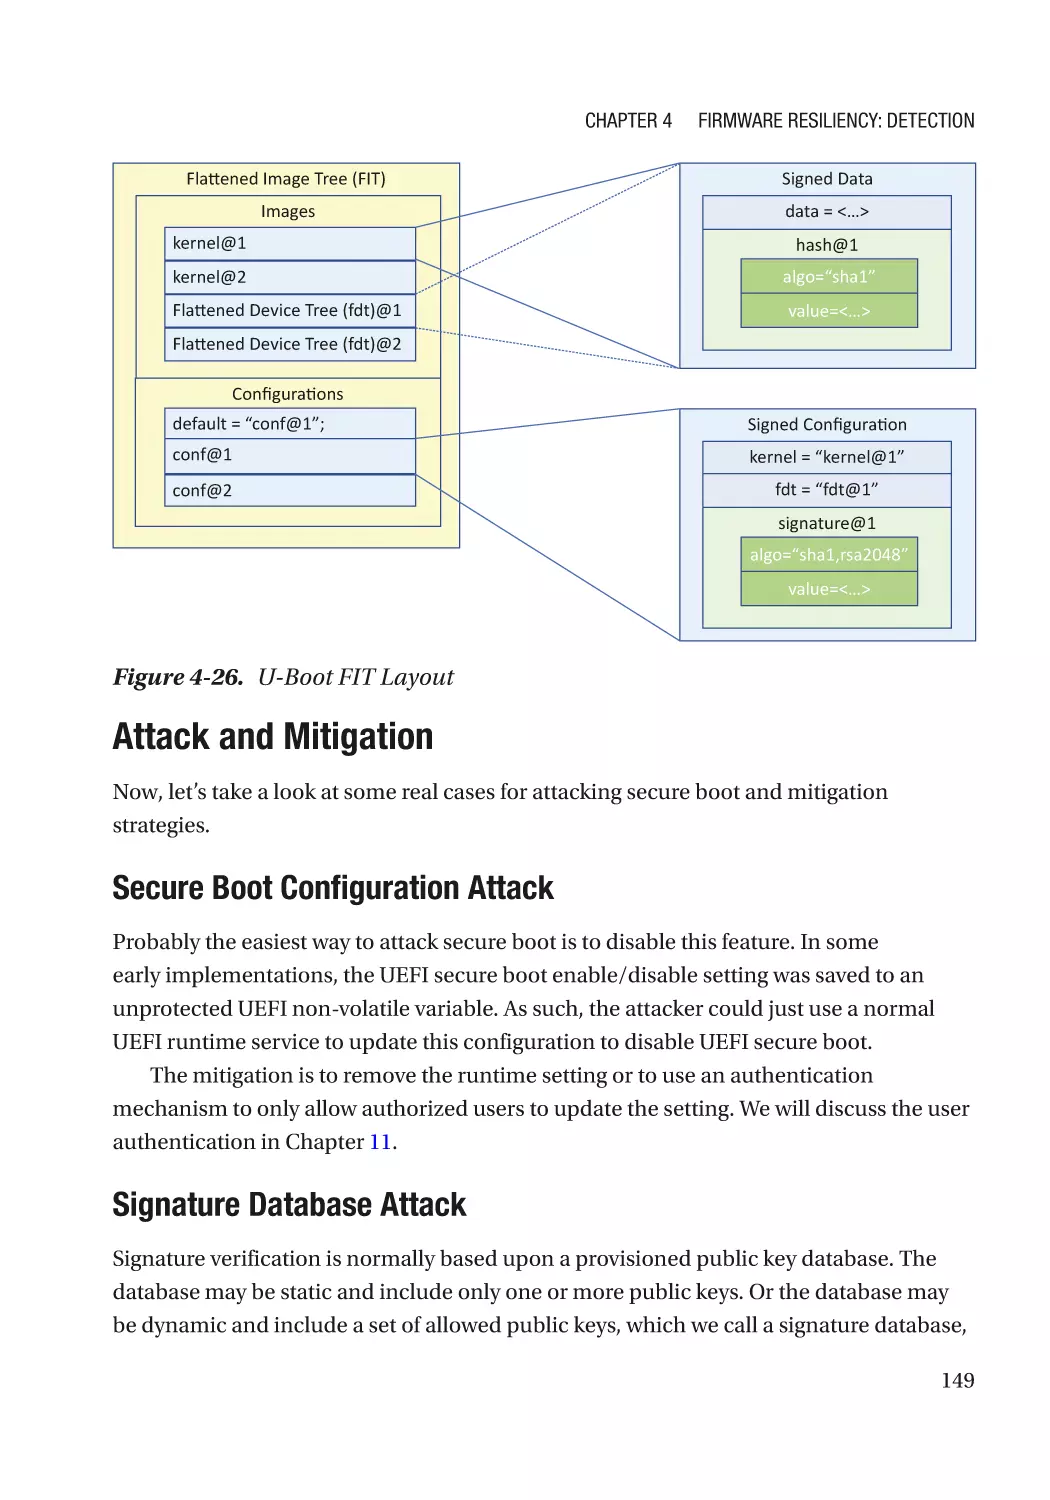 Attack and Mitigation
Secure Boot Configuration Attack
Signature Database Attack